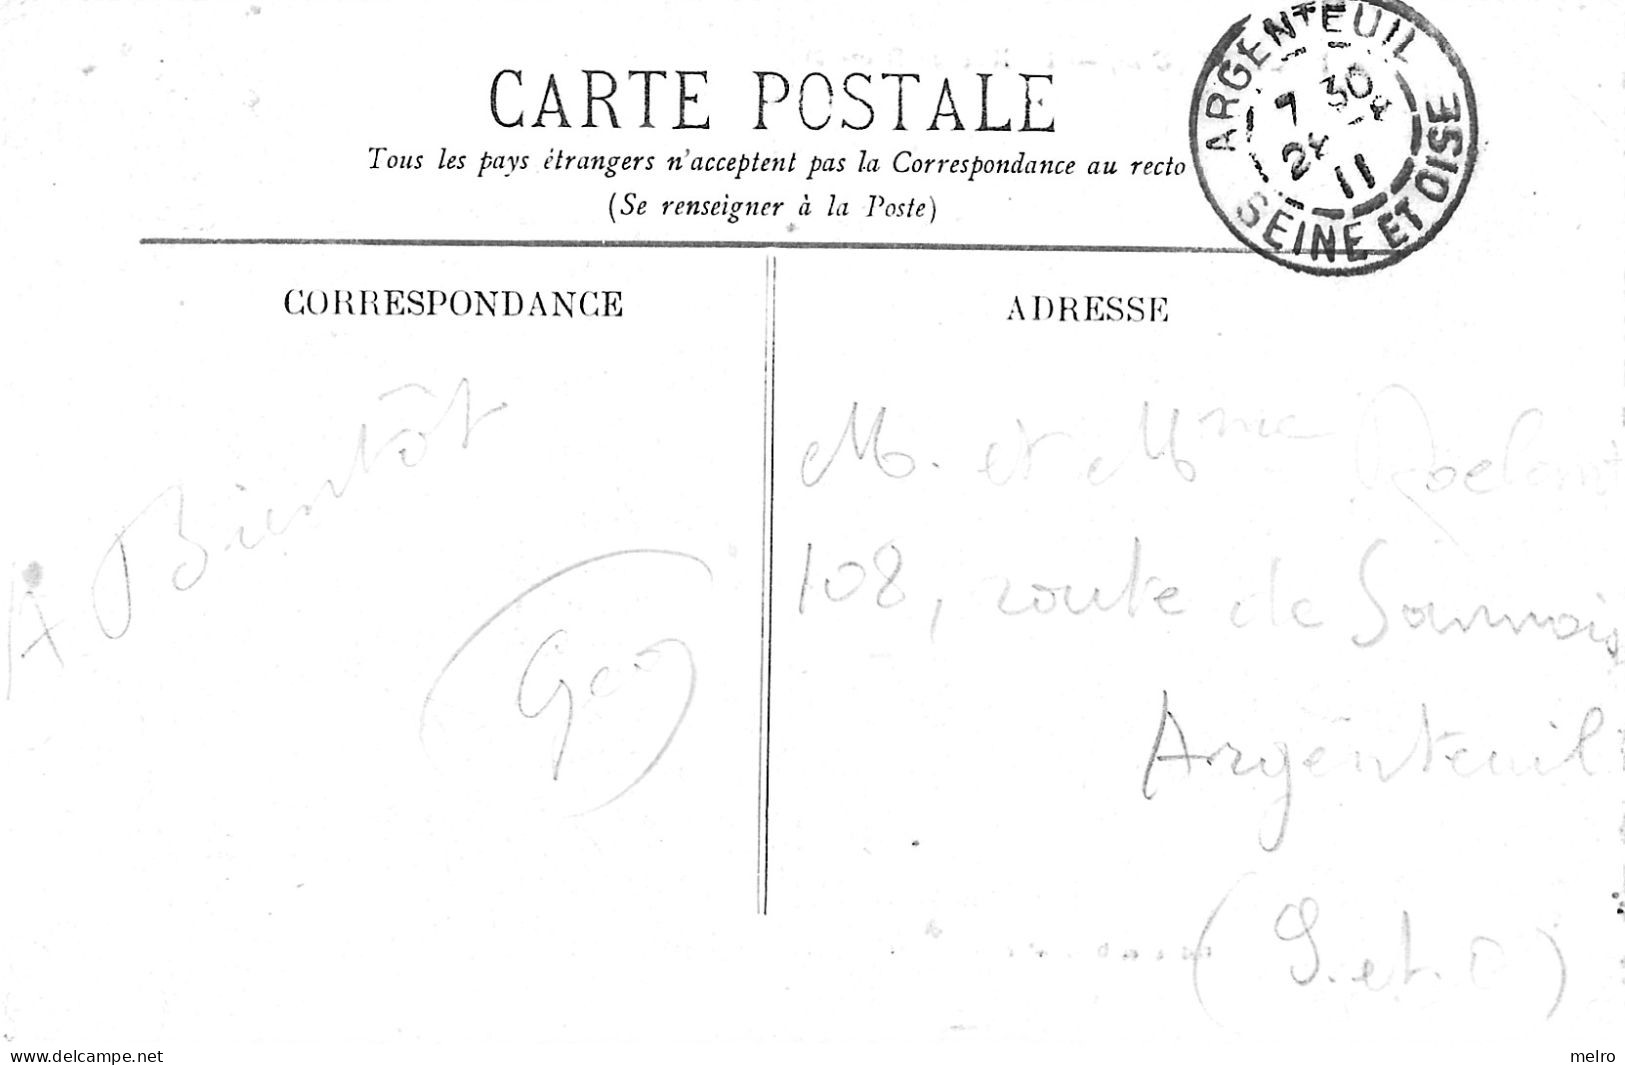 CPA- (Dep.60) - FROISSY - La Rue De Breteuil - Café De La Gare- Animé - Froissy